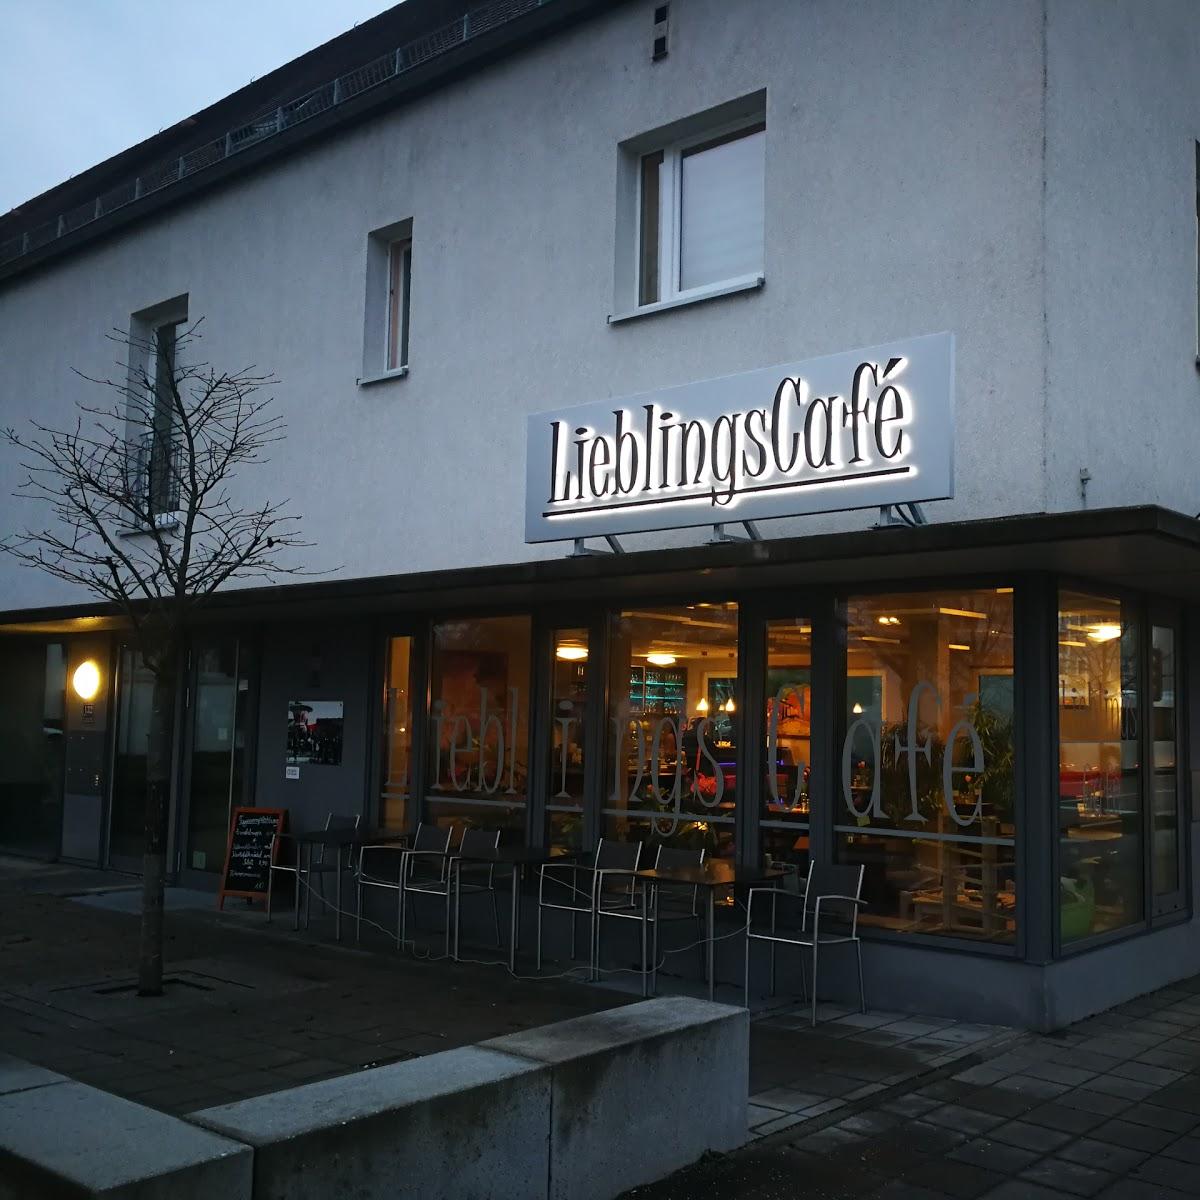 Restaurant "LieblingsCafé" in Ingolstadt